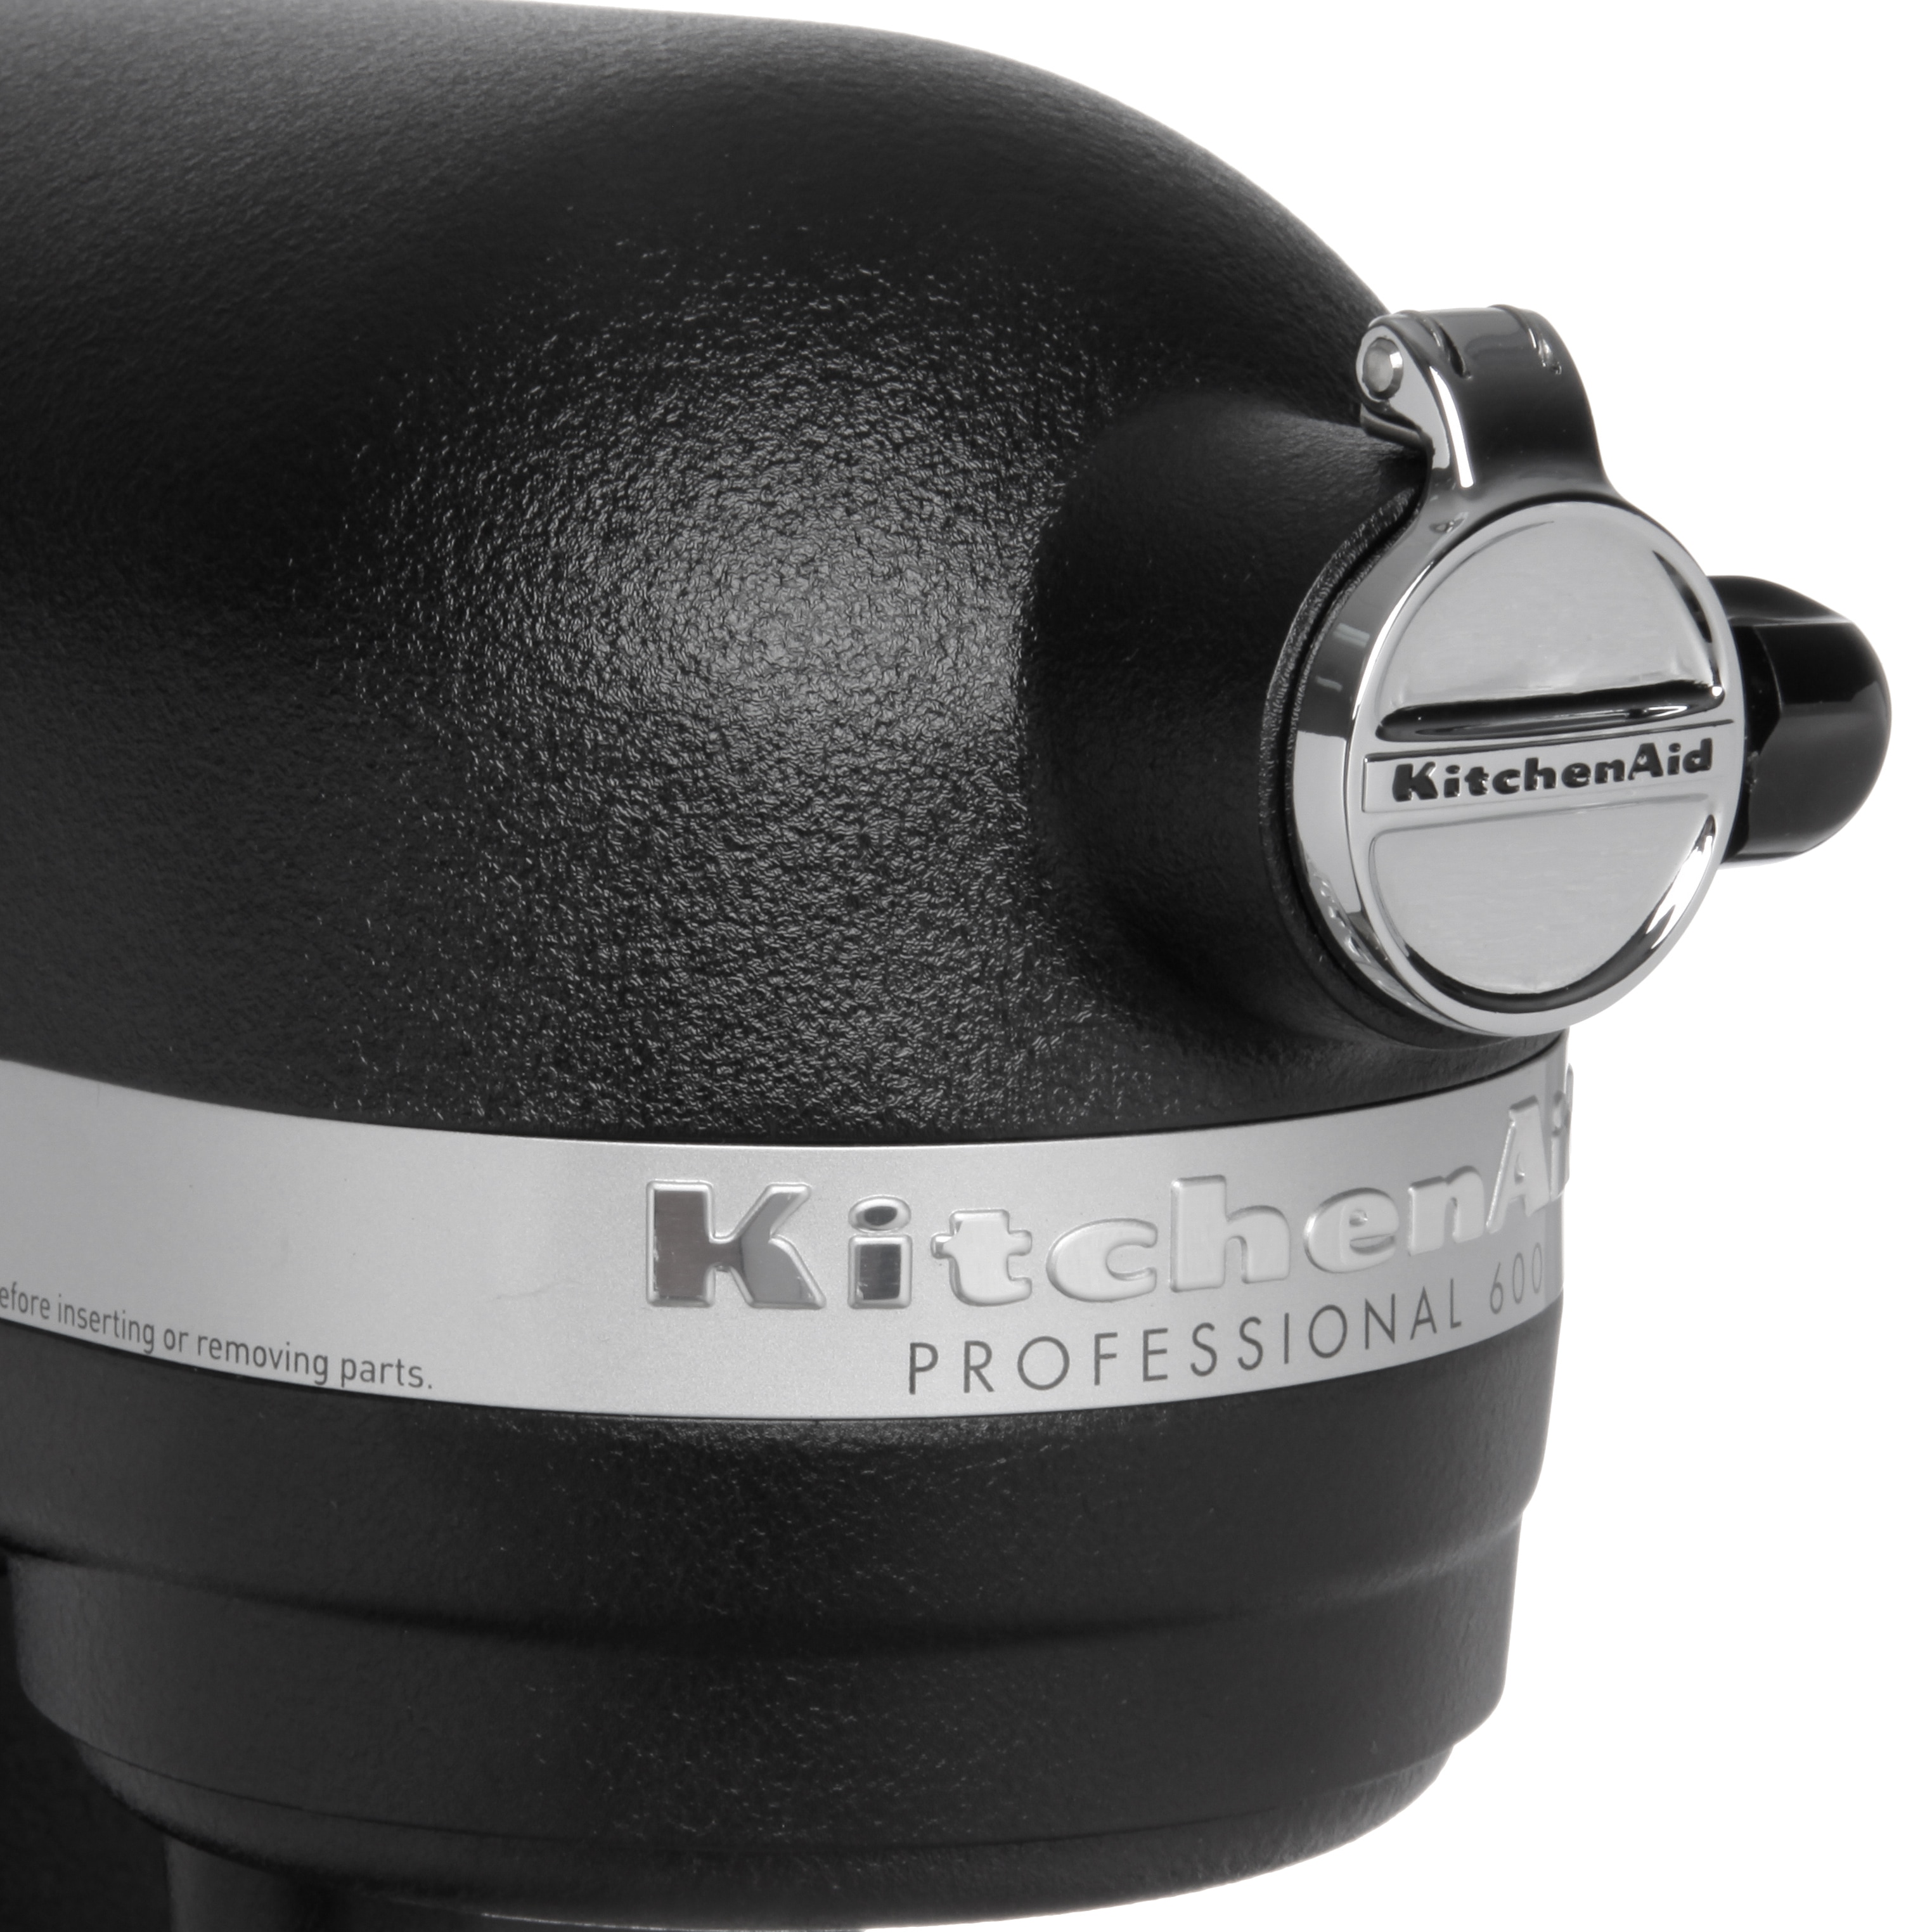 KitchenAid RKP26M1XBK Imperial Black 6-quart Pro 600 Series Stand